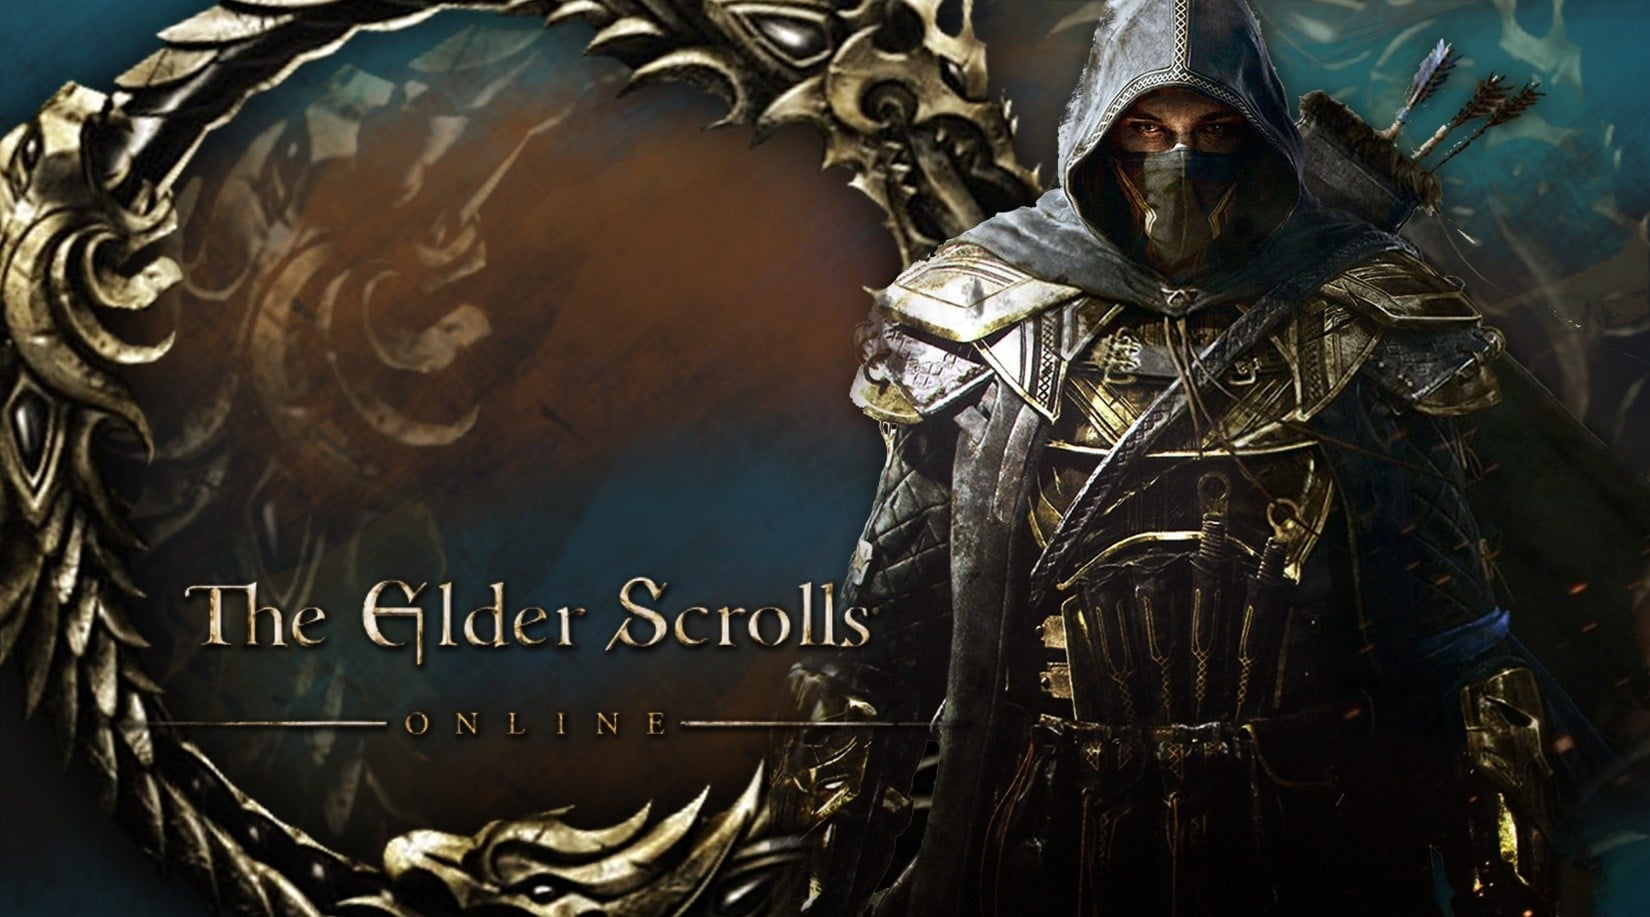 The Elder Scrolls Online Premium Subscription is Free Until Next Week